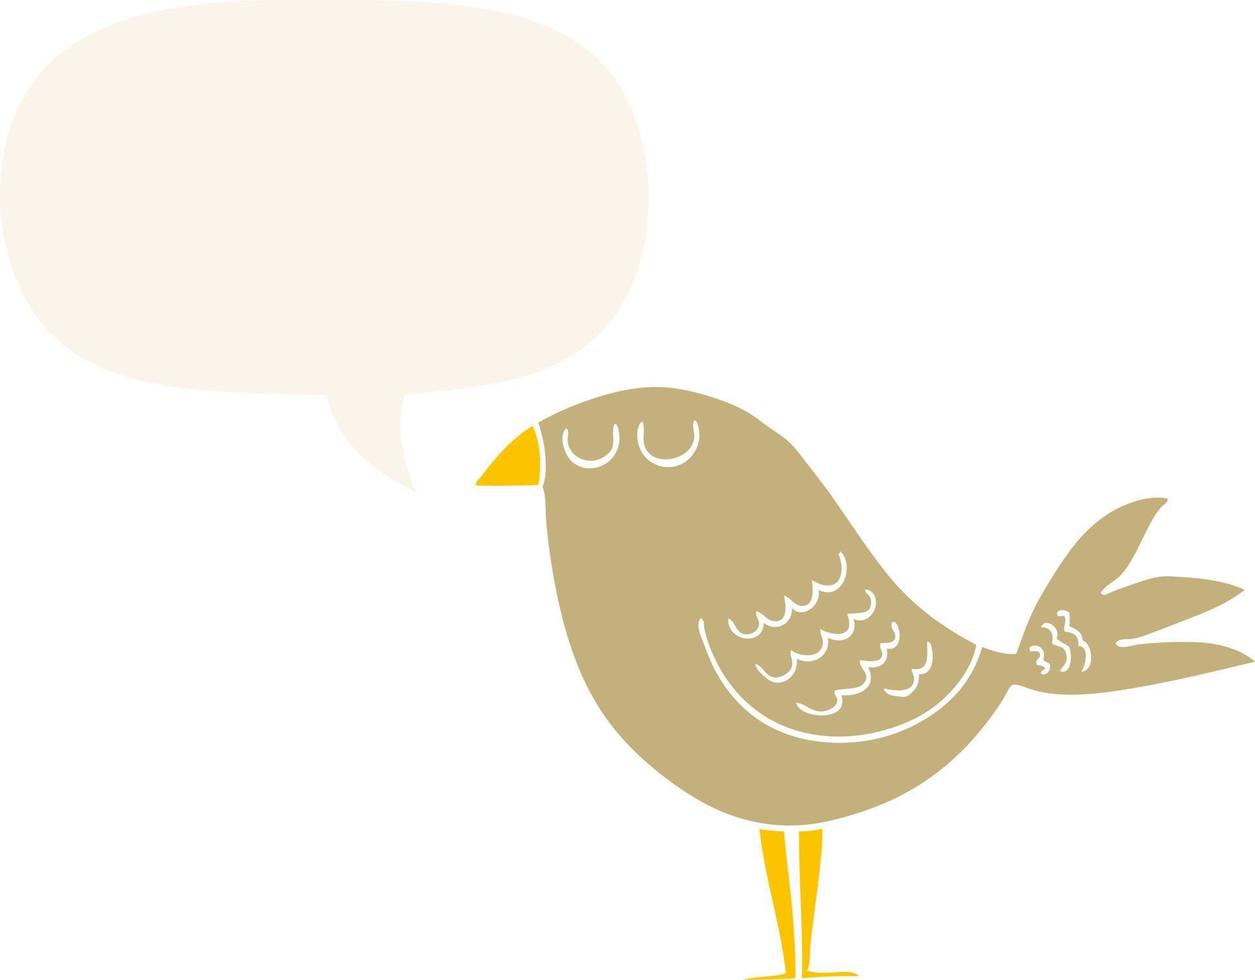 cartoon bird and speech bubble in retro style vector